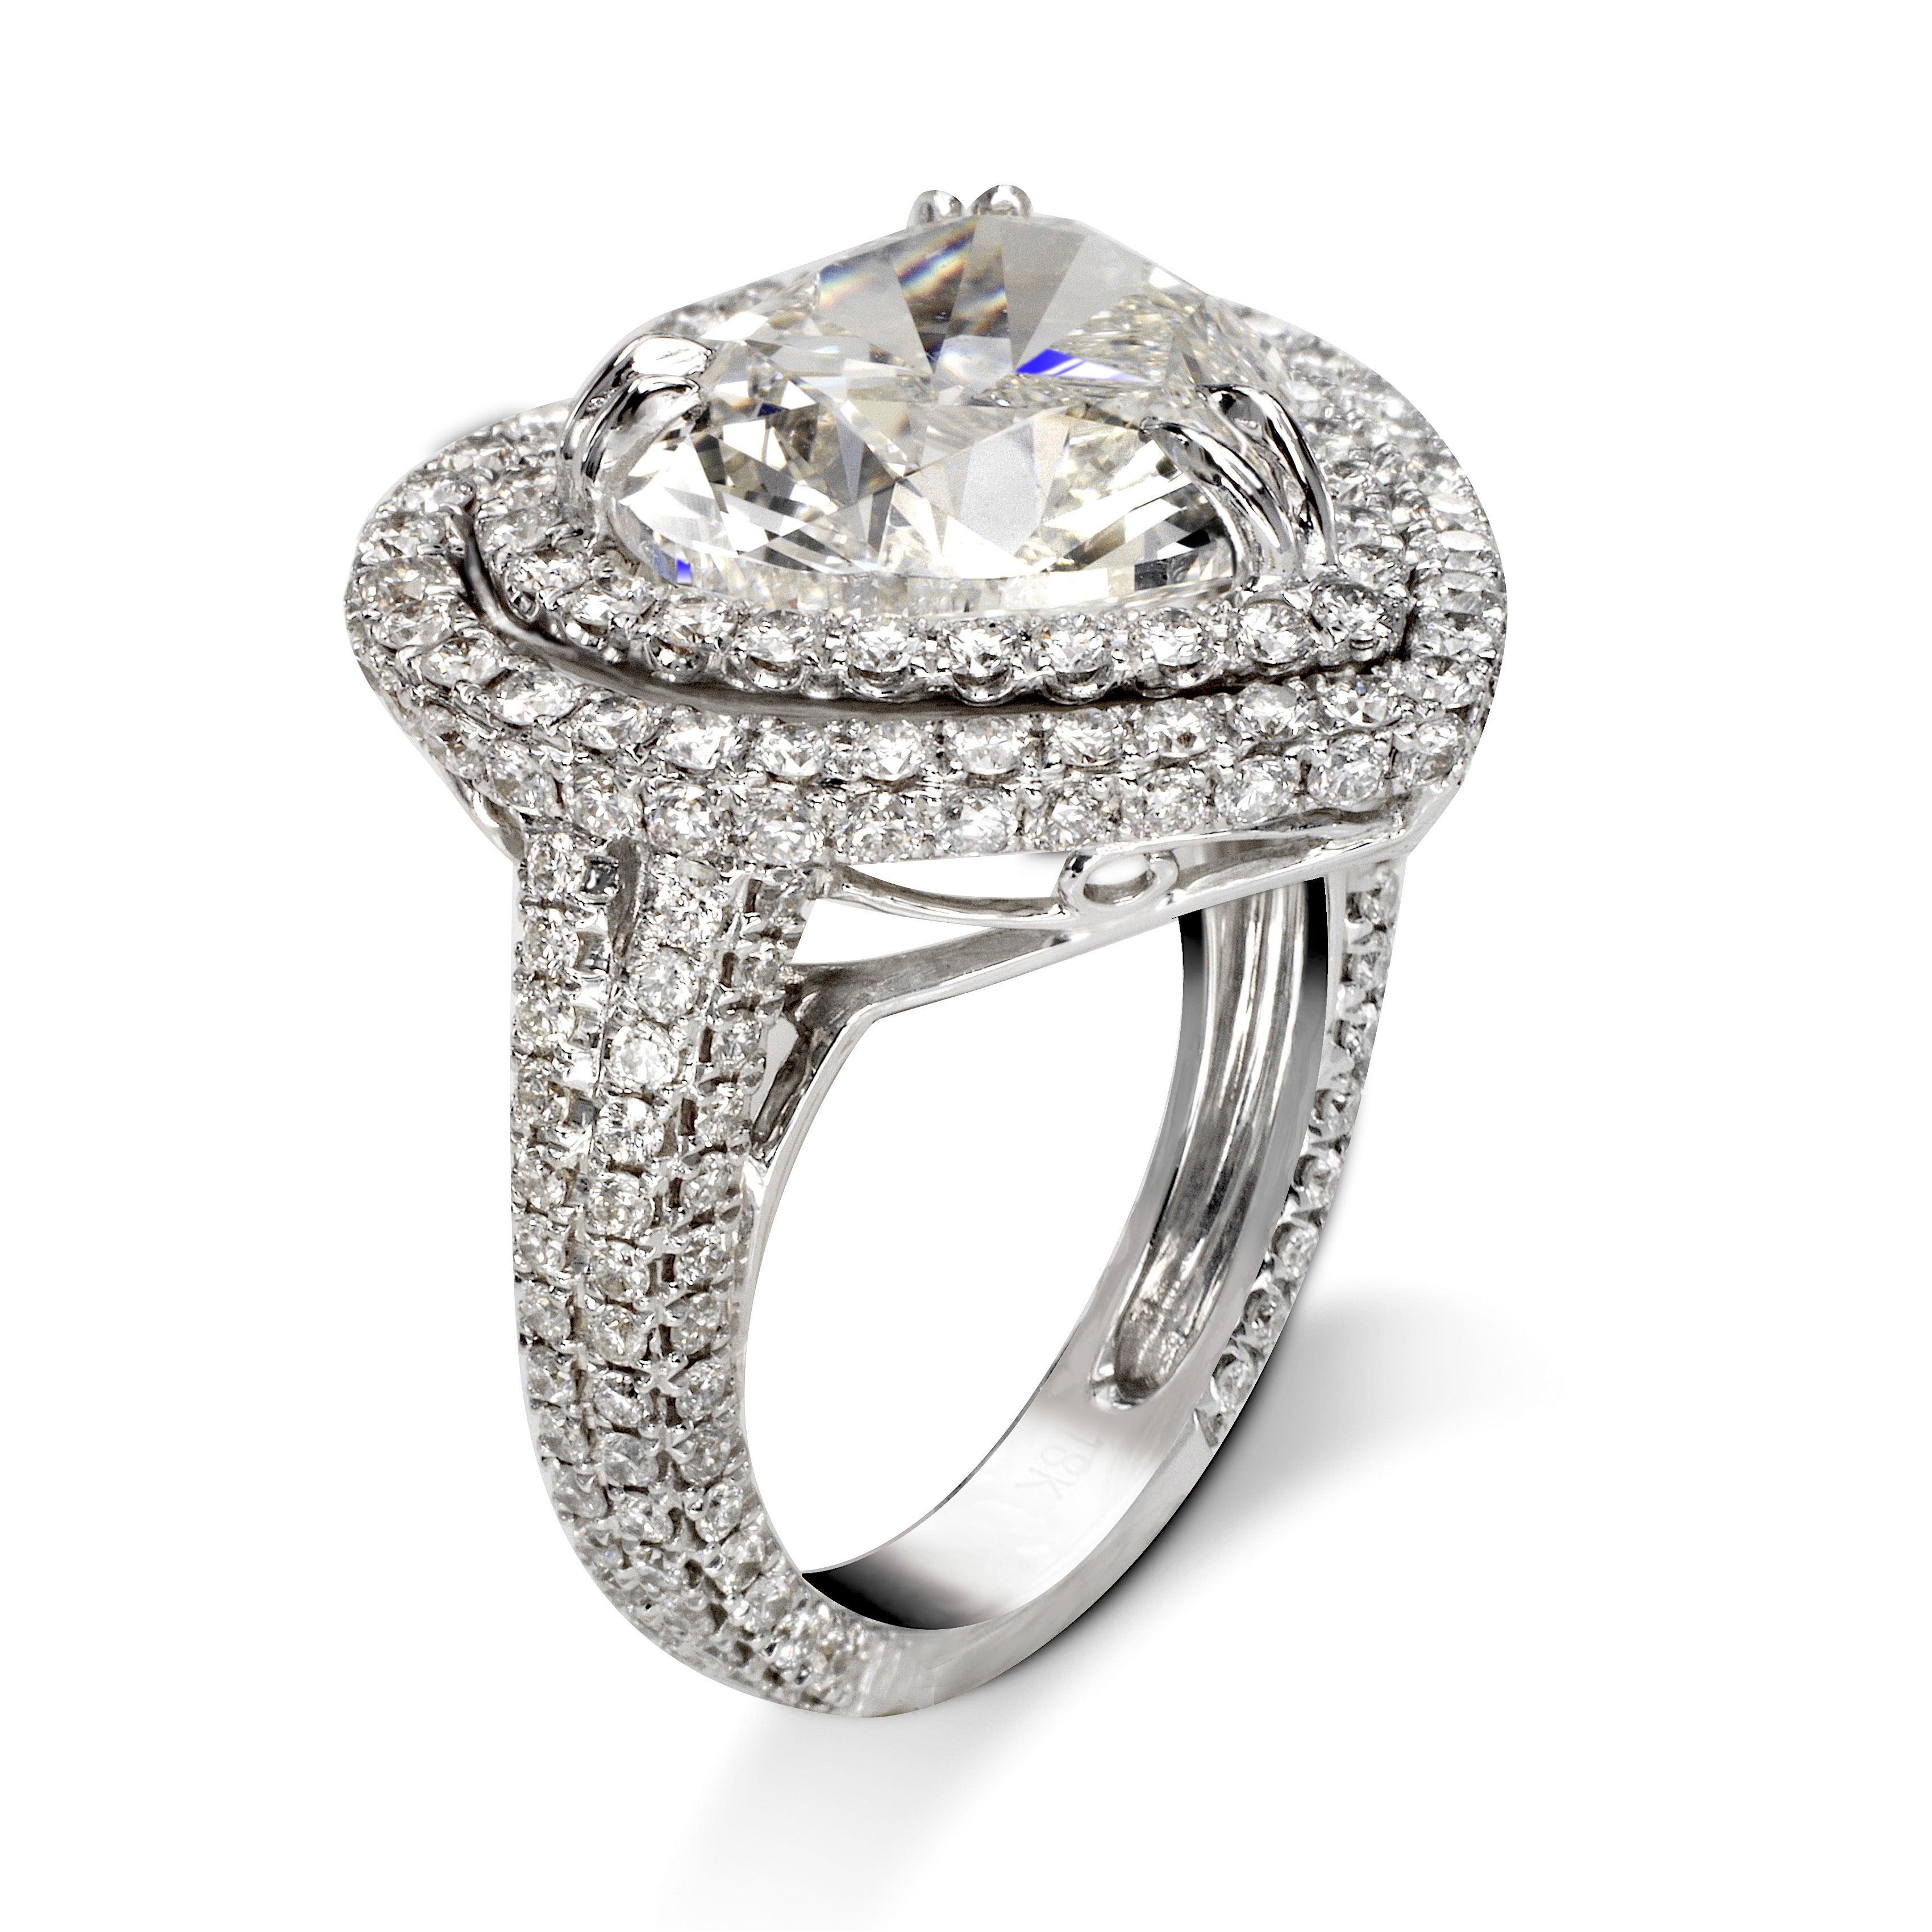 9 carat heart shaped diamond ring